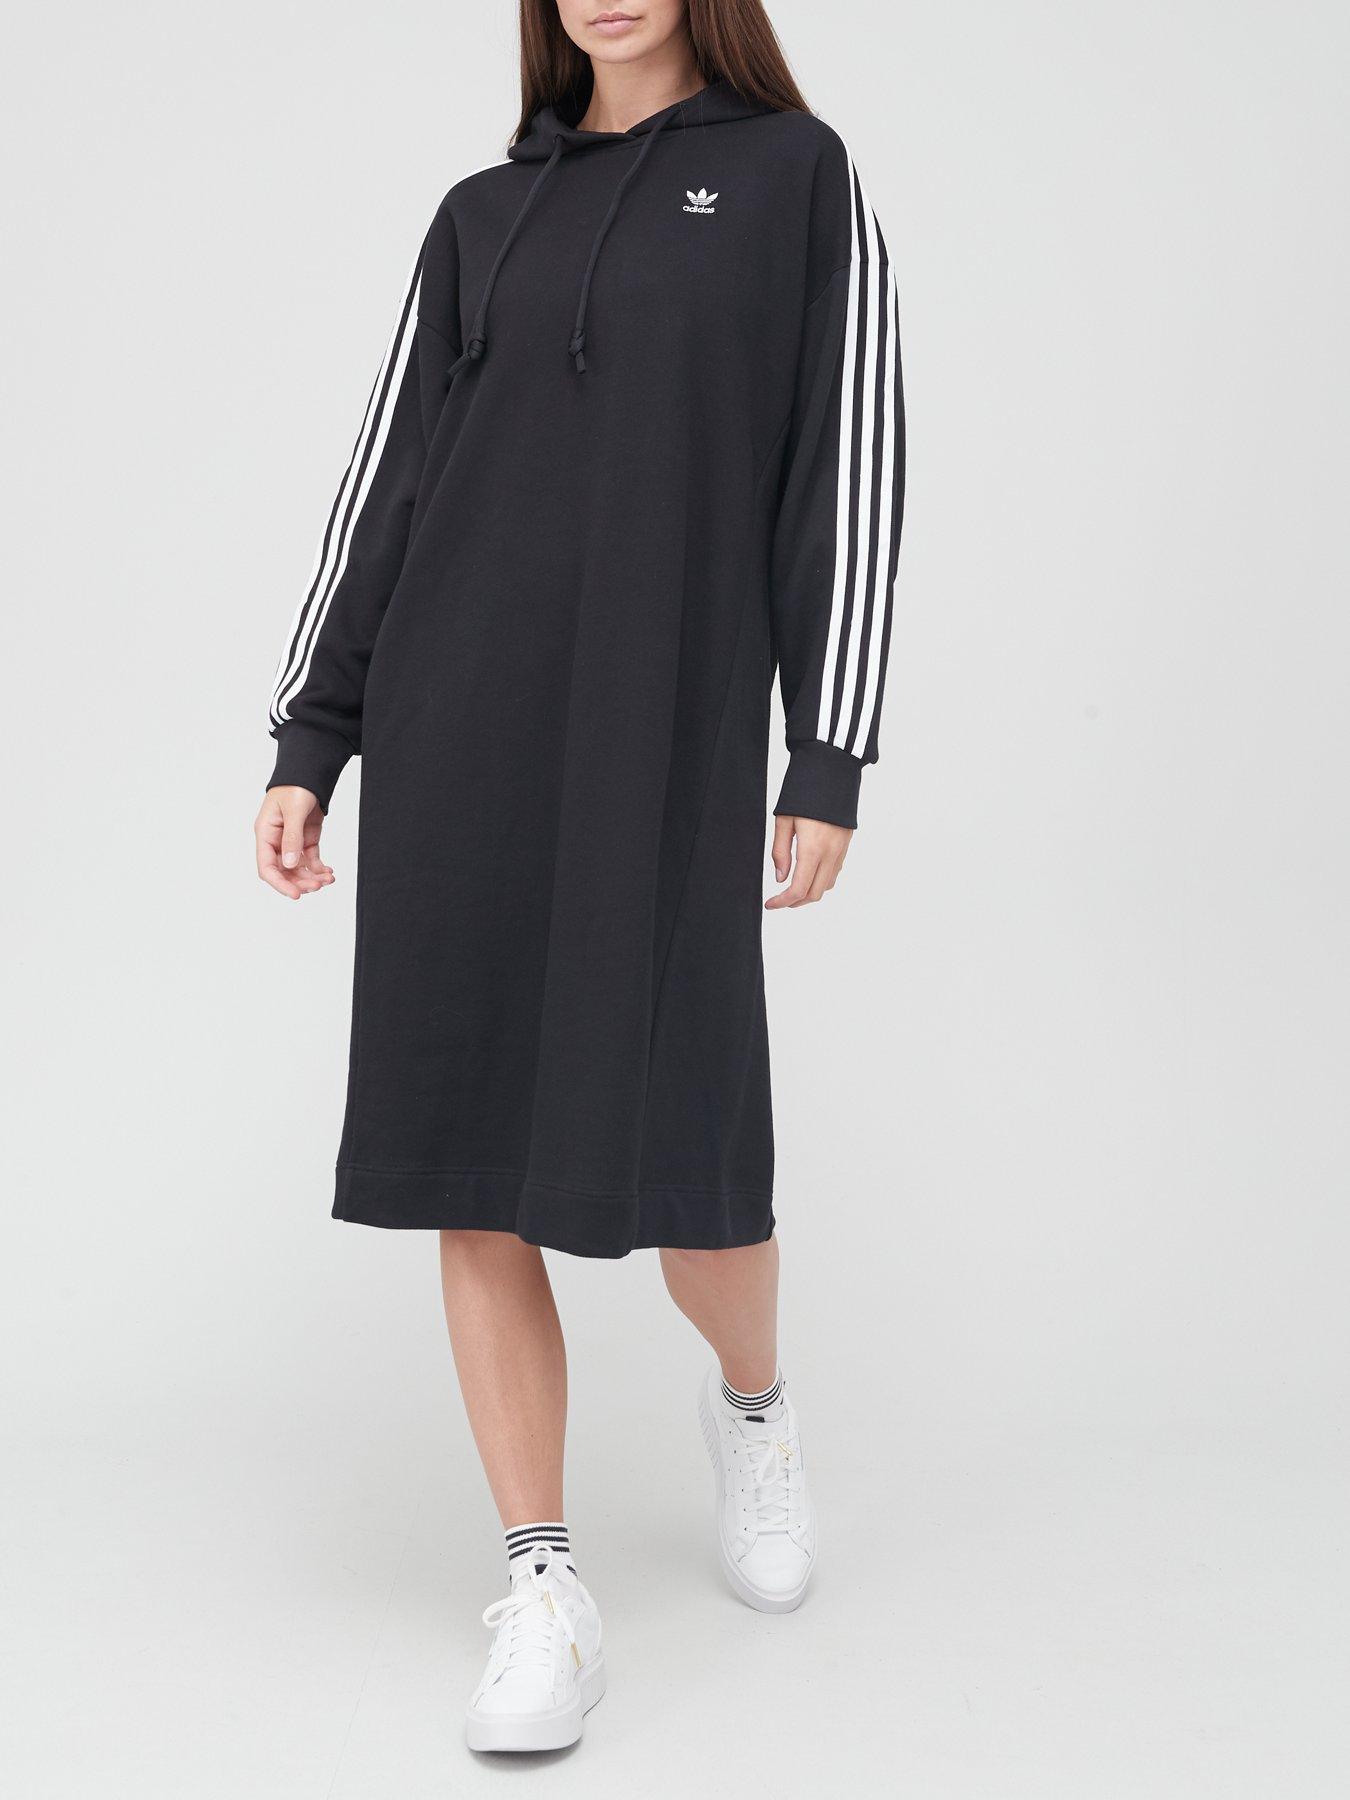 Adidas | Dresses | Women | www.very.co.uk